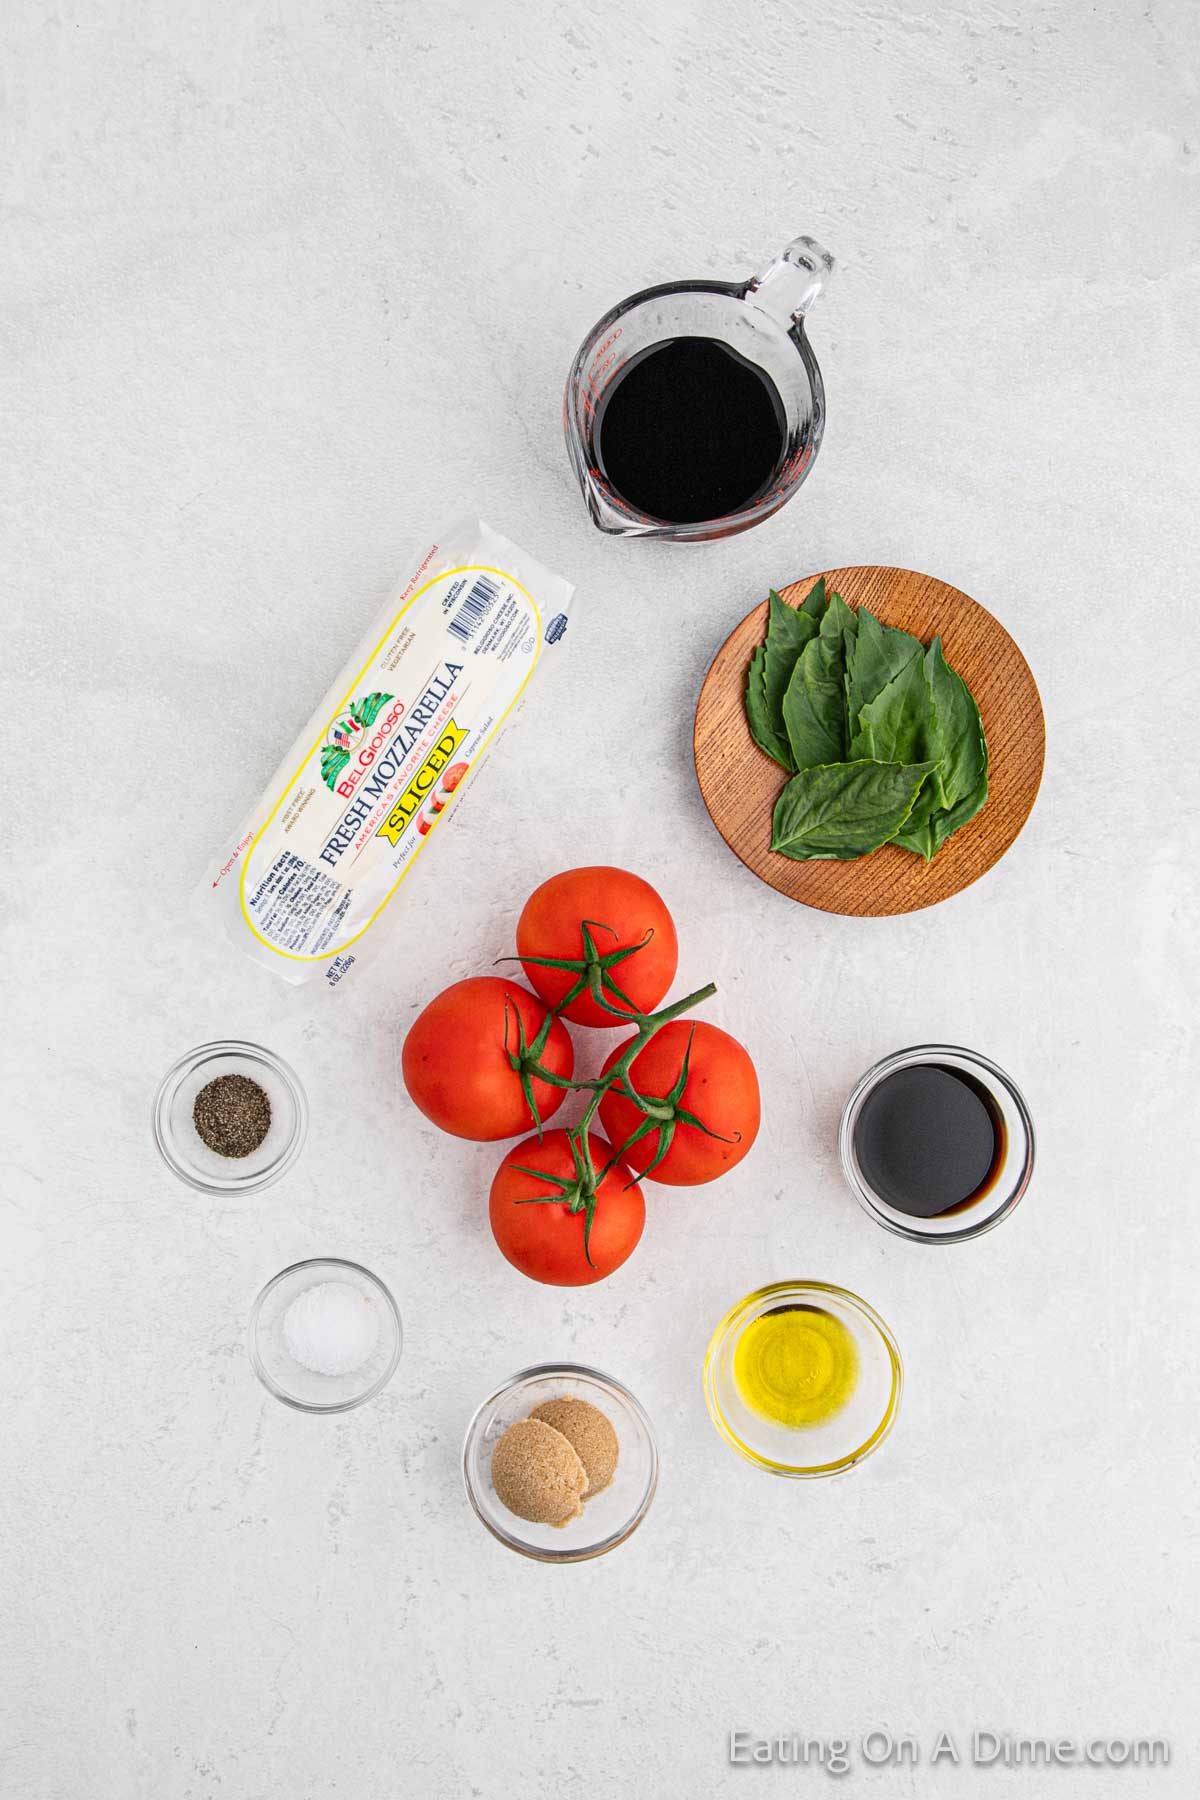 Ingredients for tomato mozzarella salad - vine tomatoes, fresh mozzarella, balsamic vinegar, basil, sea salt, pepper, balsamic vinegar, brown sugar